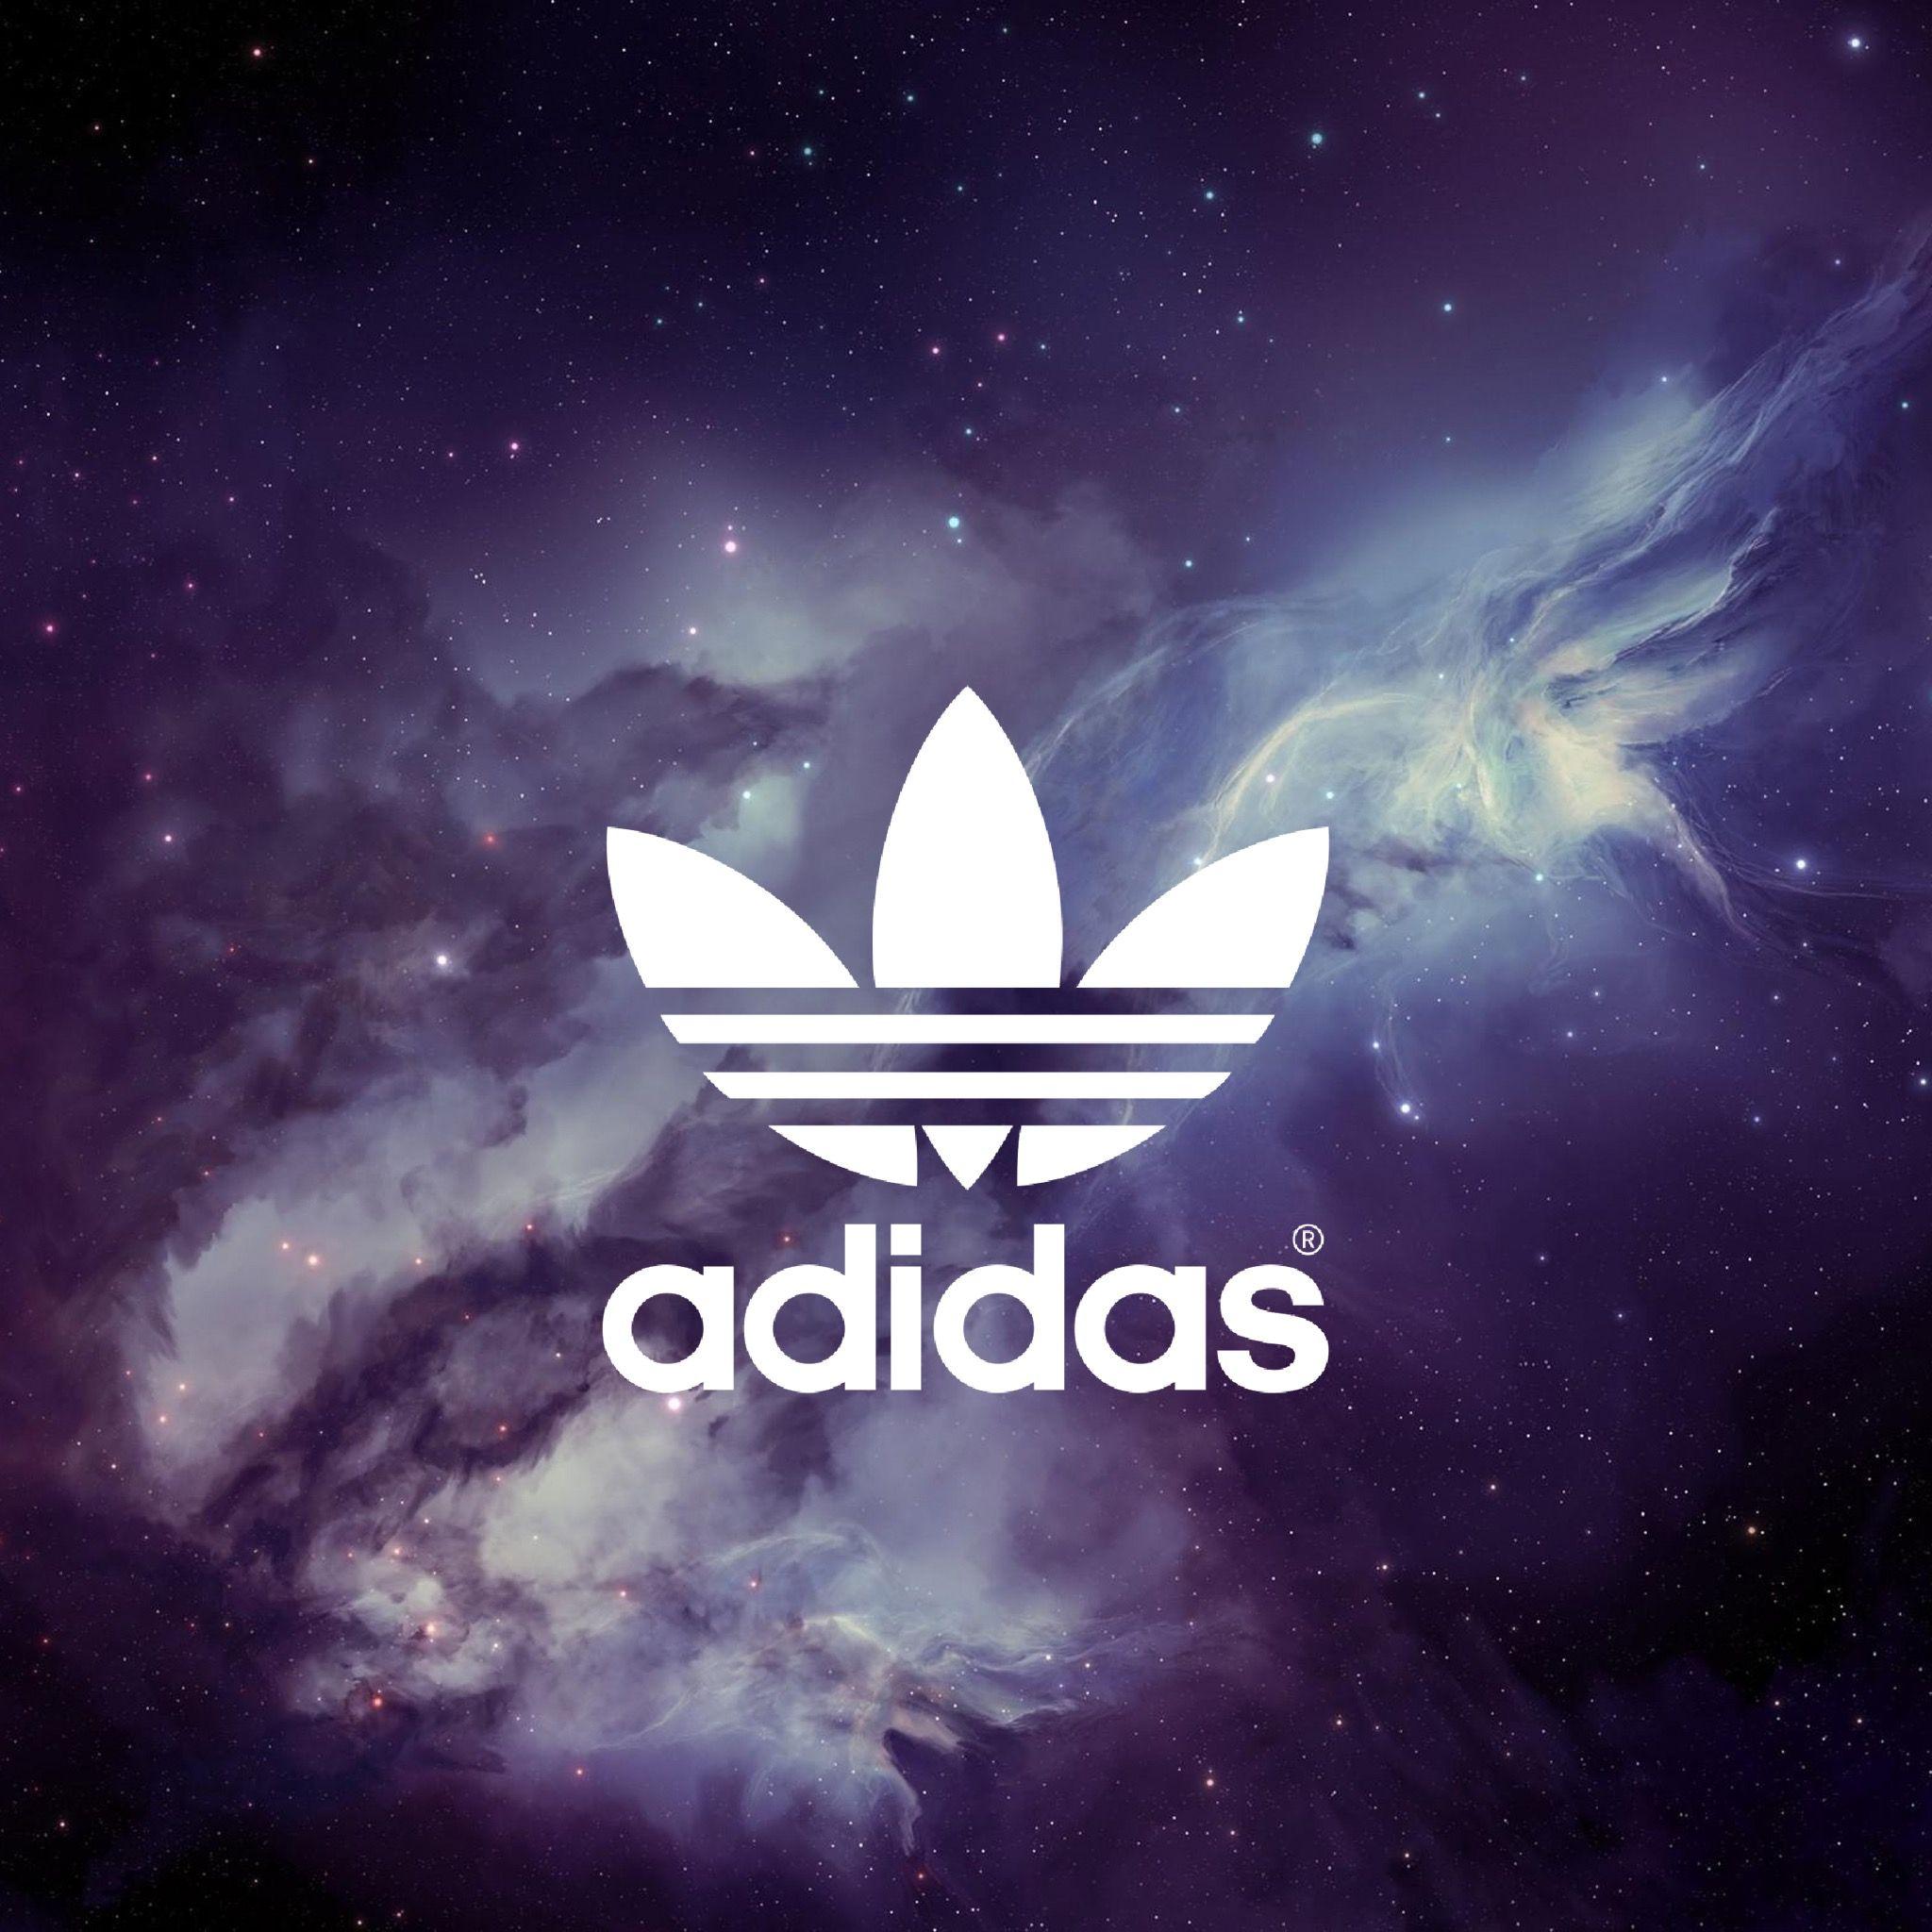 Adidas Galaxy Logo - Adidas Galaxy Wallpaper | WALPAPERS in 2019 | Galaxy wallpaper ...